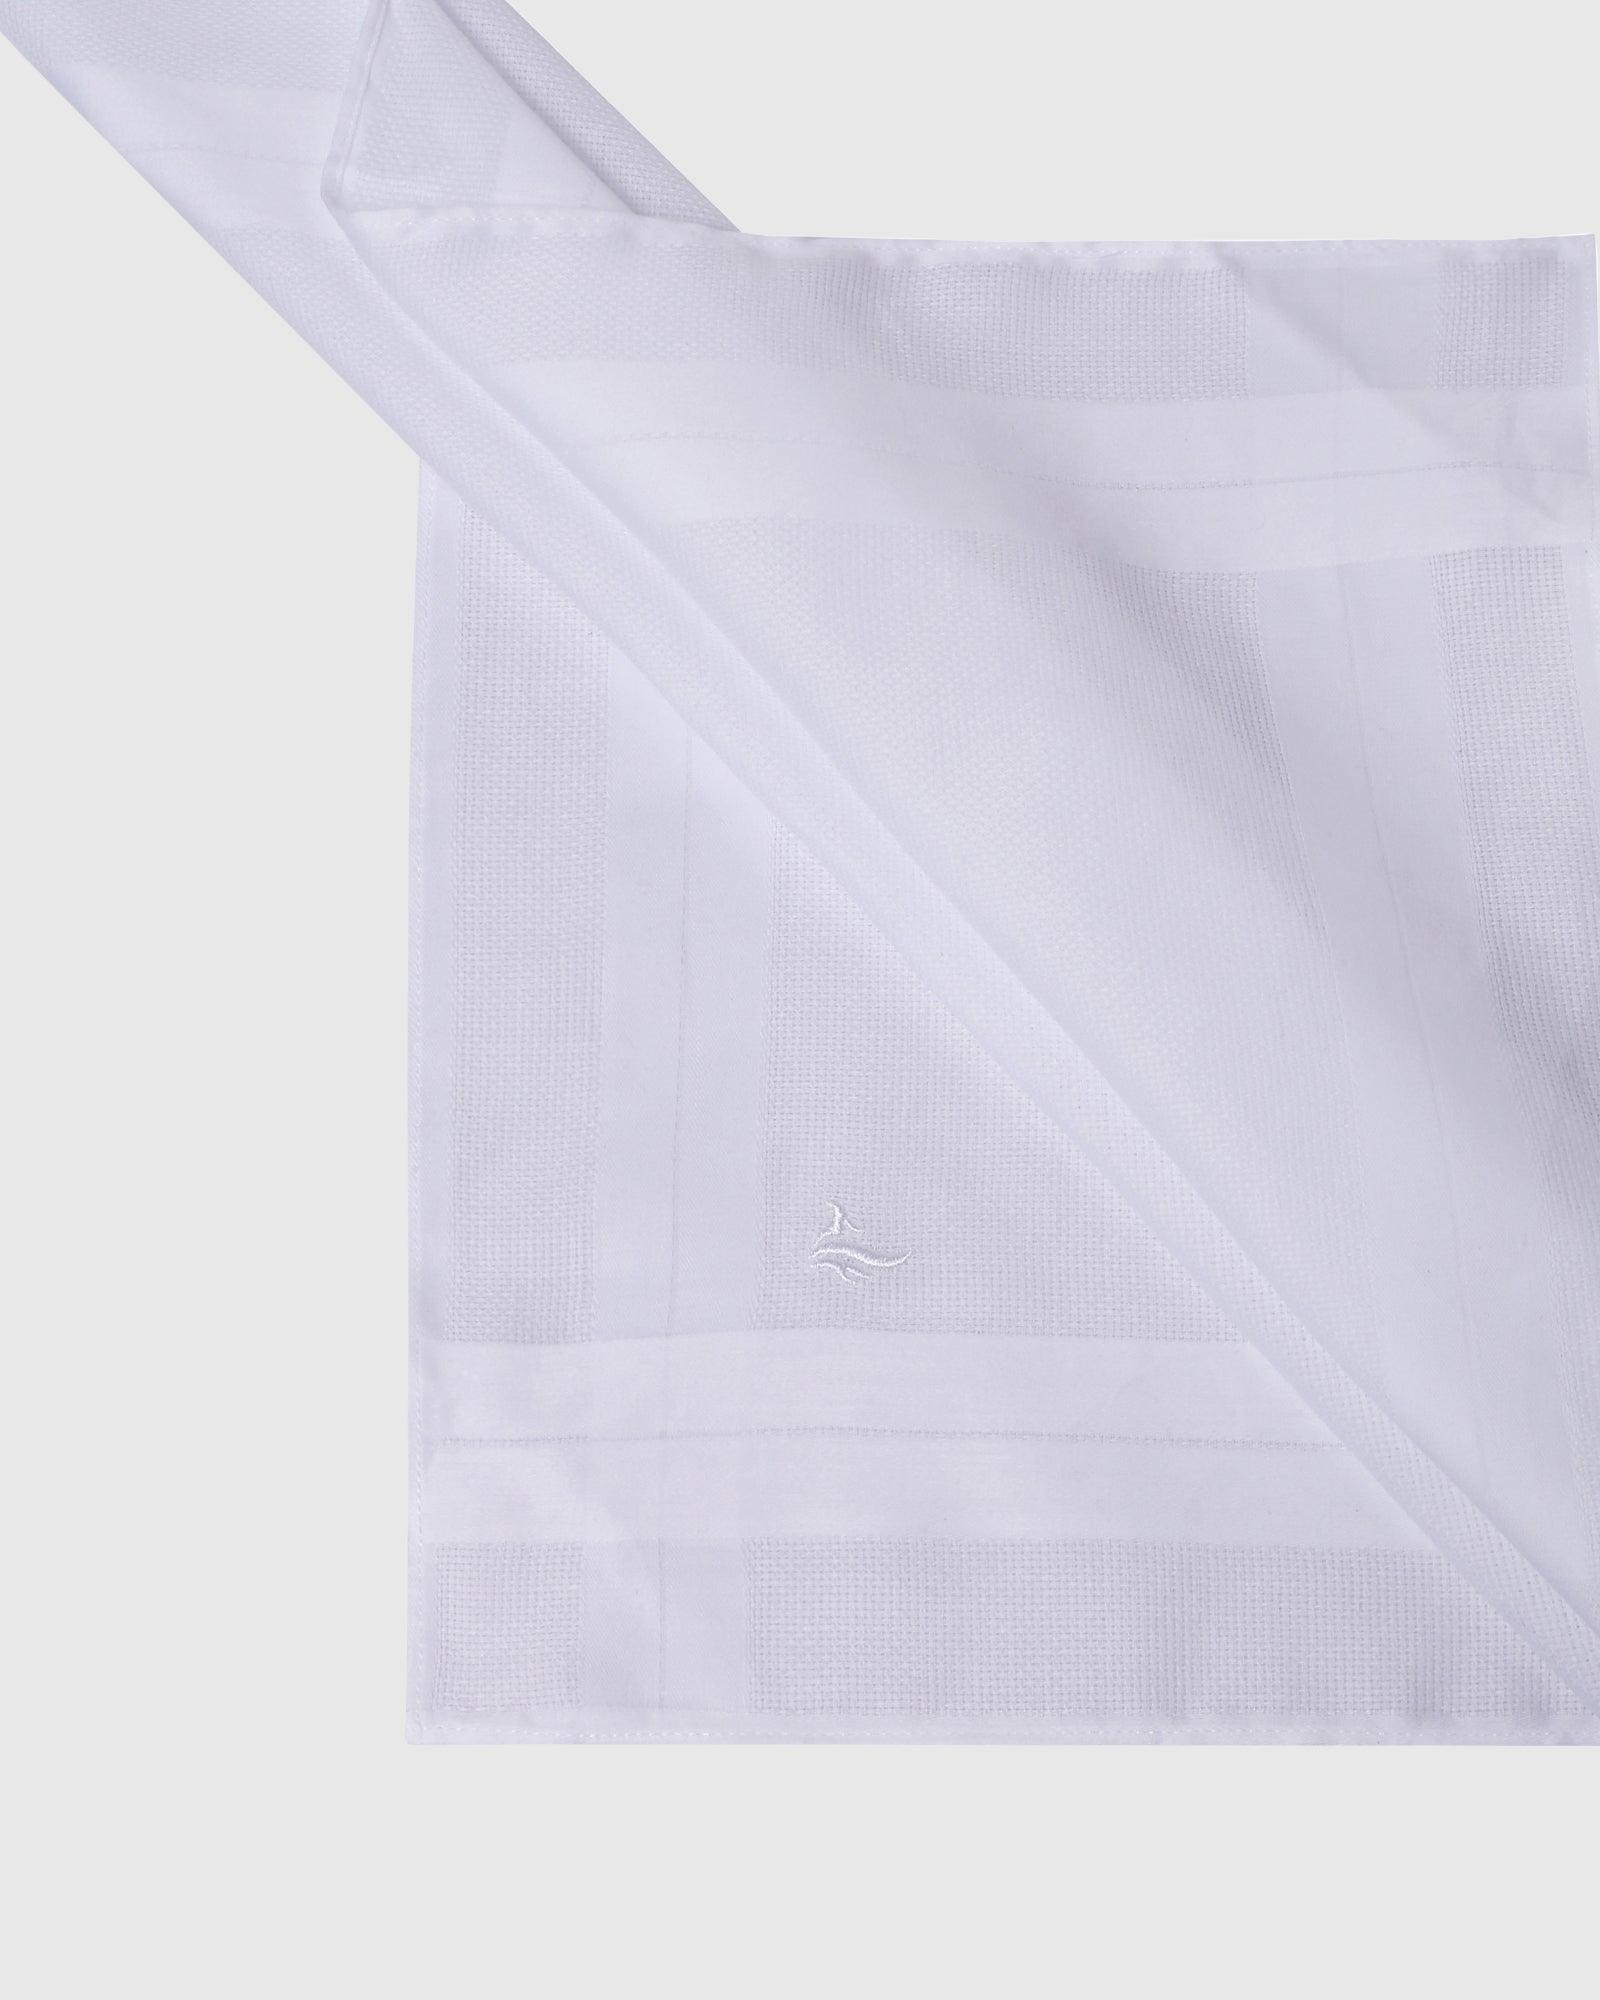 Cotton White Solid Handkerchief - Robert